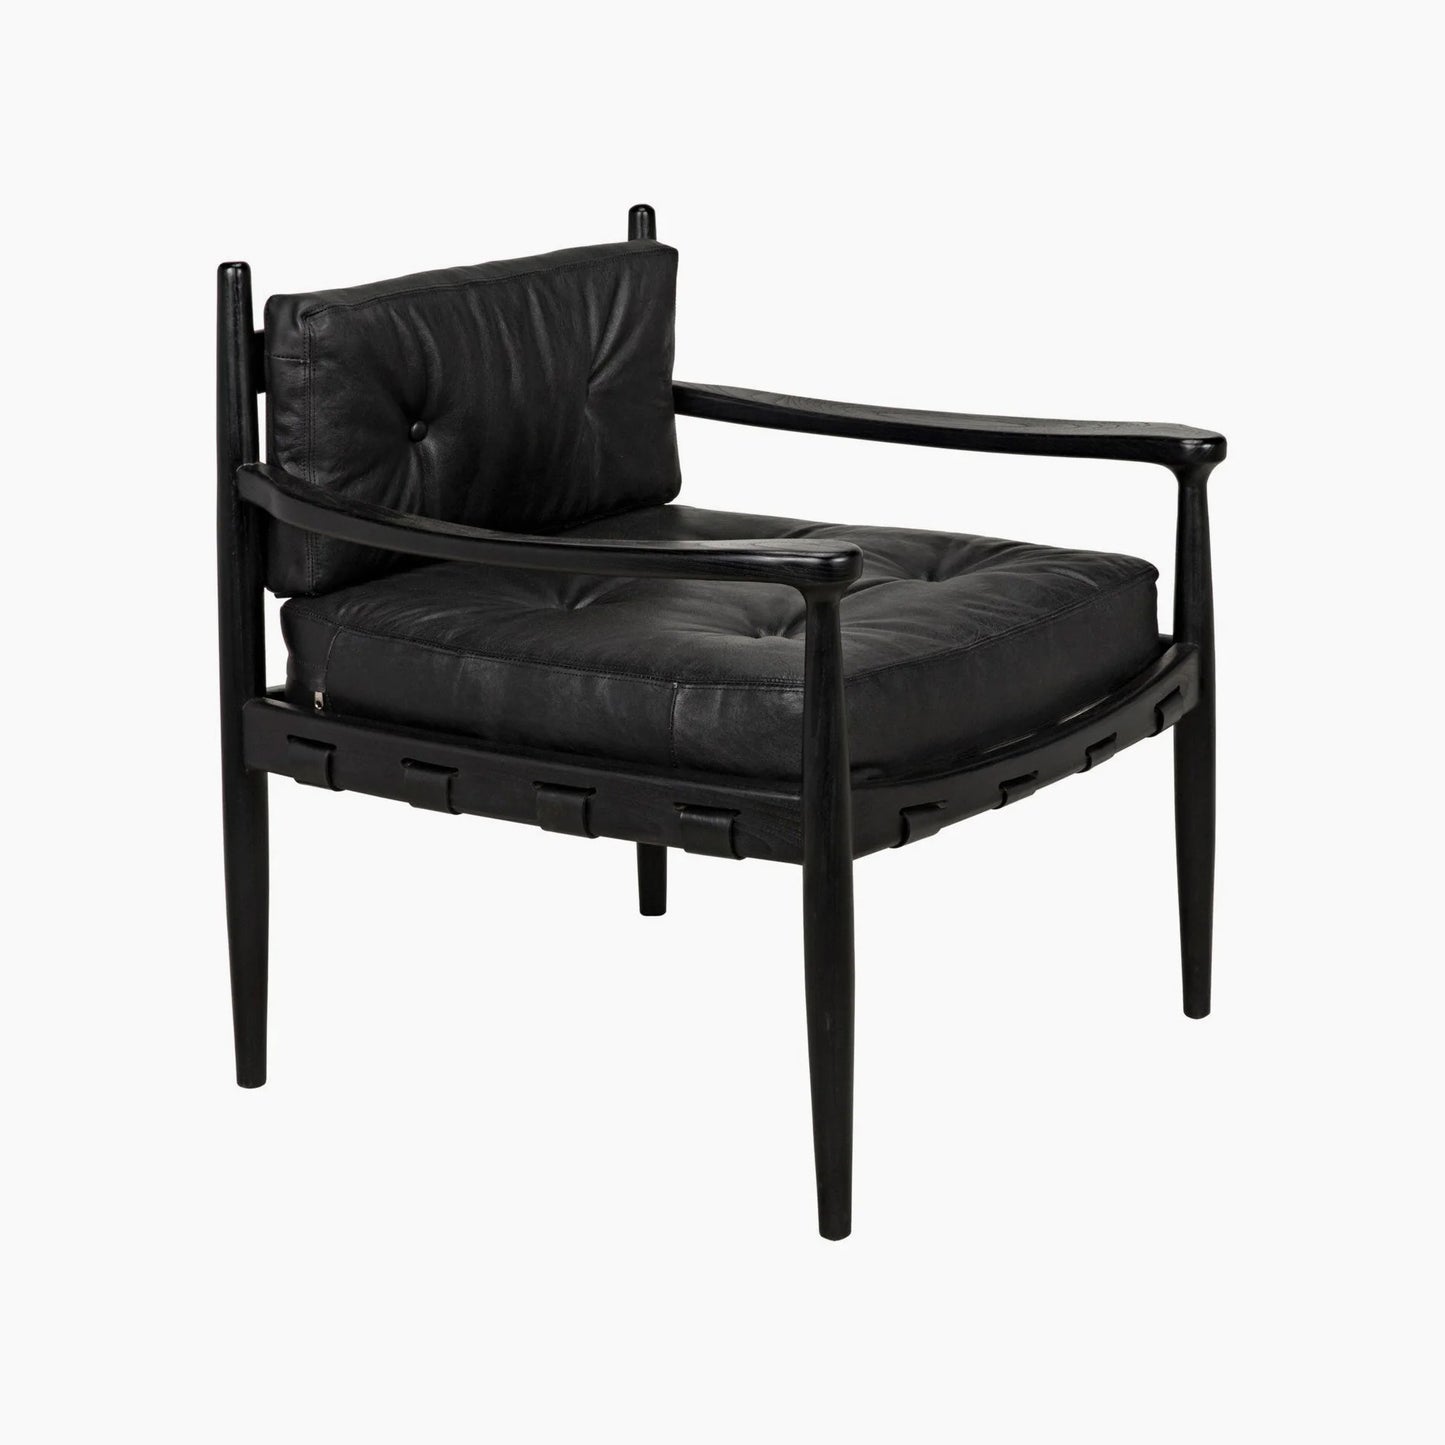 Myla Lounge Chair, Charcoal Black